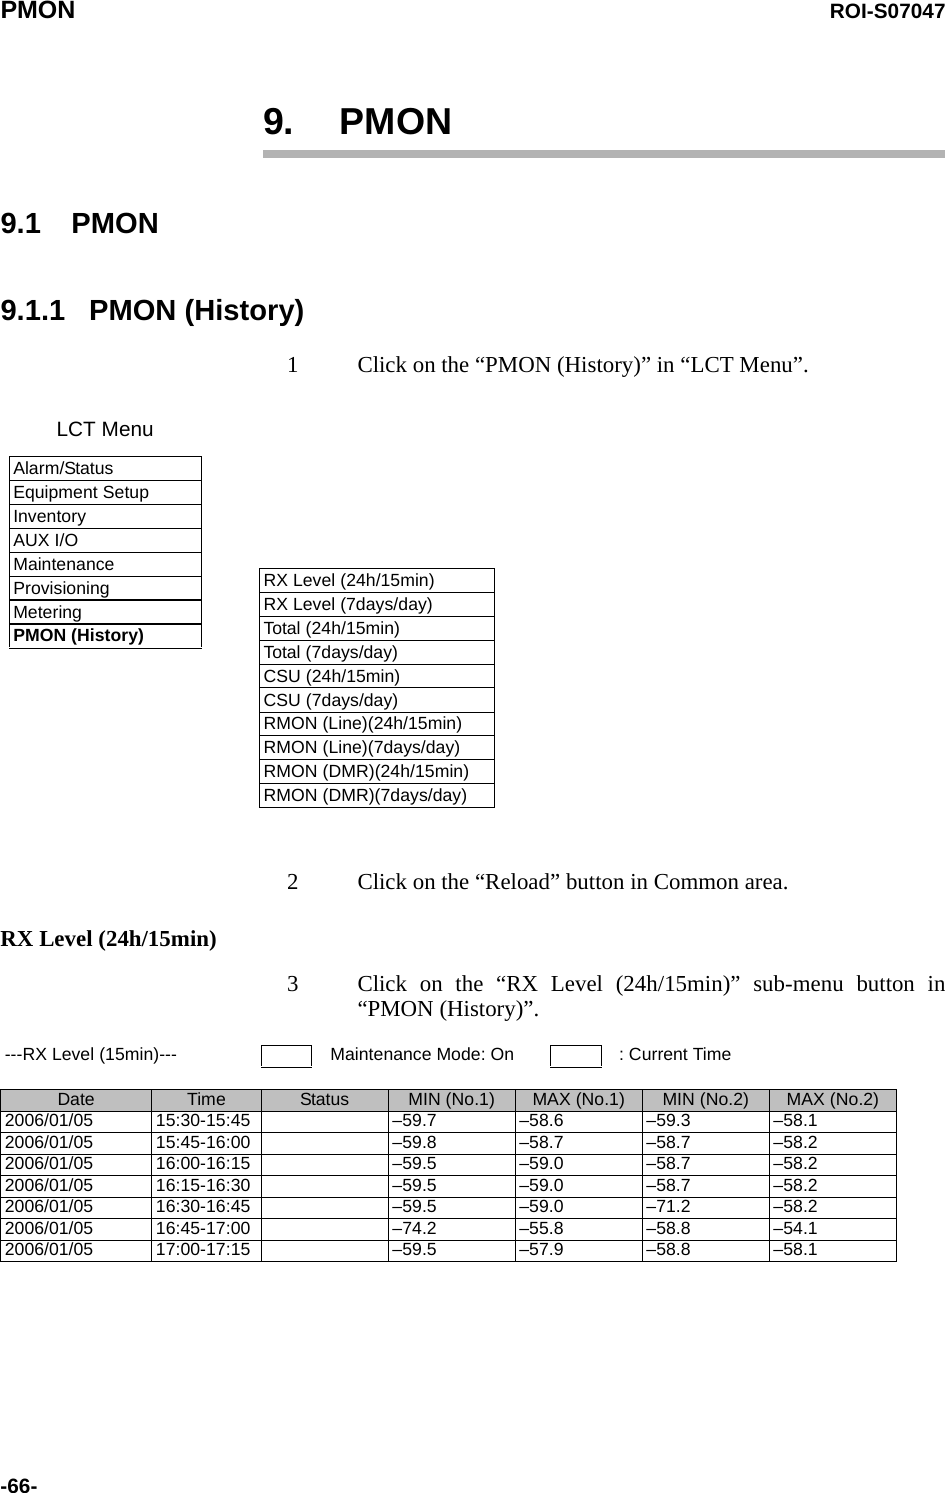 PMON ROI-S07047-66-9. PMON9.1 PMON9.1.1 PMON (History)1 Click on the “PMON (History)” in “LCT Menu”. 2 Click on the “Reload” button in Common area.RX Level (24h/15min)3 Click on the “RX Level (24h/15min)” sub-menu button in“PMON (History)”.LCT MenuAlarm/StatusEquipment SetupInventoryAUX I/OMaintenanceProvisioningMeteringPMON (History)RX Level (24h/15min)RX Level (7days/day)Total (24h/15min)Total (7days/day)CSU (24h/15min)CSU (7days/day)RMON (Line)(24h/15min)RMON (Line)(7days/day)RMON (DMR)(24h/15min)RMON (DMR)(7days/day)---RX Level (15min)--- Maintenance Mode: On : Current TimeDate Time Status MIN (No.1) MAX (No.1) MIN (No.2) MAX (No.2)2006/01/05 15:30-15:45 –59.7 –58.6 –59.3 –58.12006/01/05 15:45-16:00 –59.8 –58.7 –58.7 –58.22006/01/05 16:00-16:15 –59.5 –59.0 –58.7 –58.22006/01/05 16:15-16:30 –59.5 –59.0 –58.7 –58.22006/01/05 16:30-16:45 –59.5 –59.0 –71.2 –58.22006/01/05 16:45-17:00 –74.2 –55.8 –58.8 –54.12006/01/05 17:00-17:15 –59.5 –57.9 –58.8 –58.1